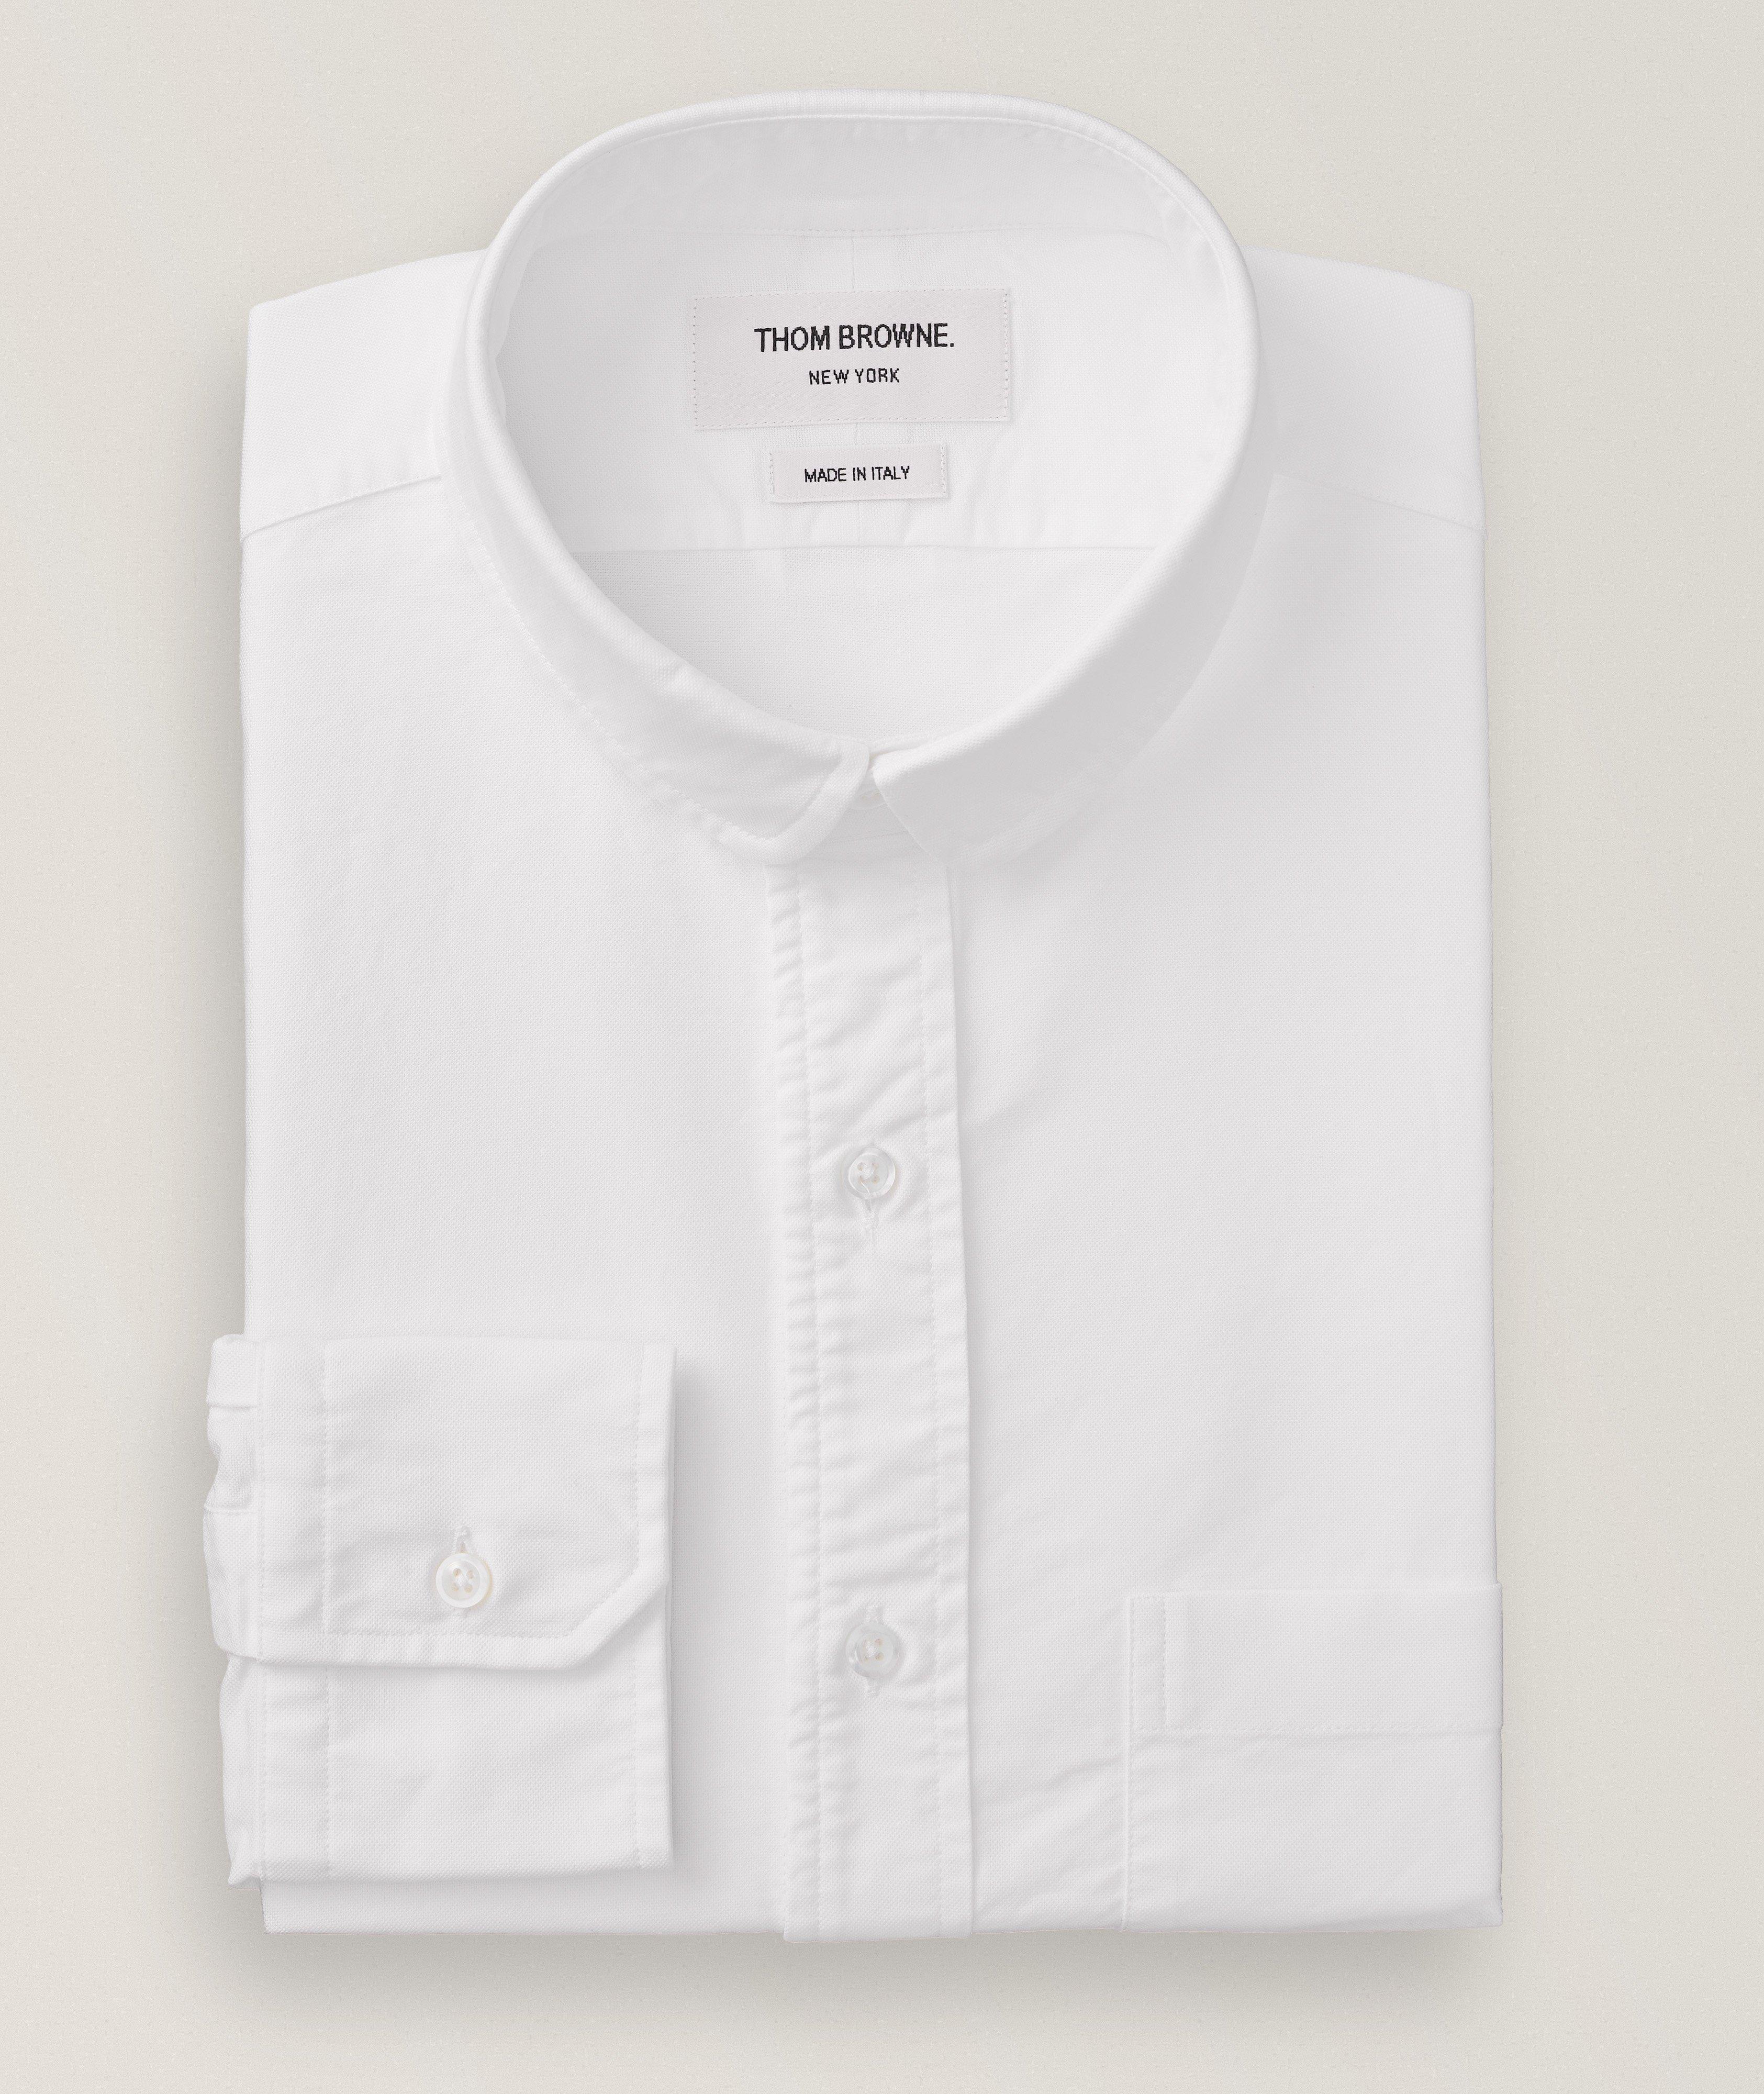 Thom Browne Armband Cotton Oxford Shirt